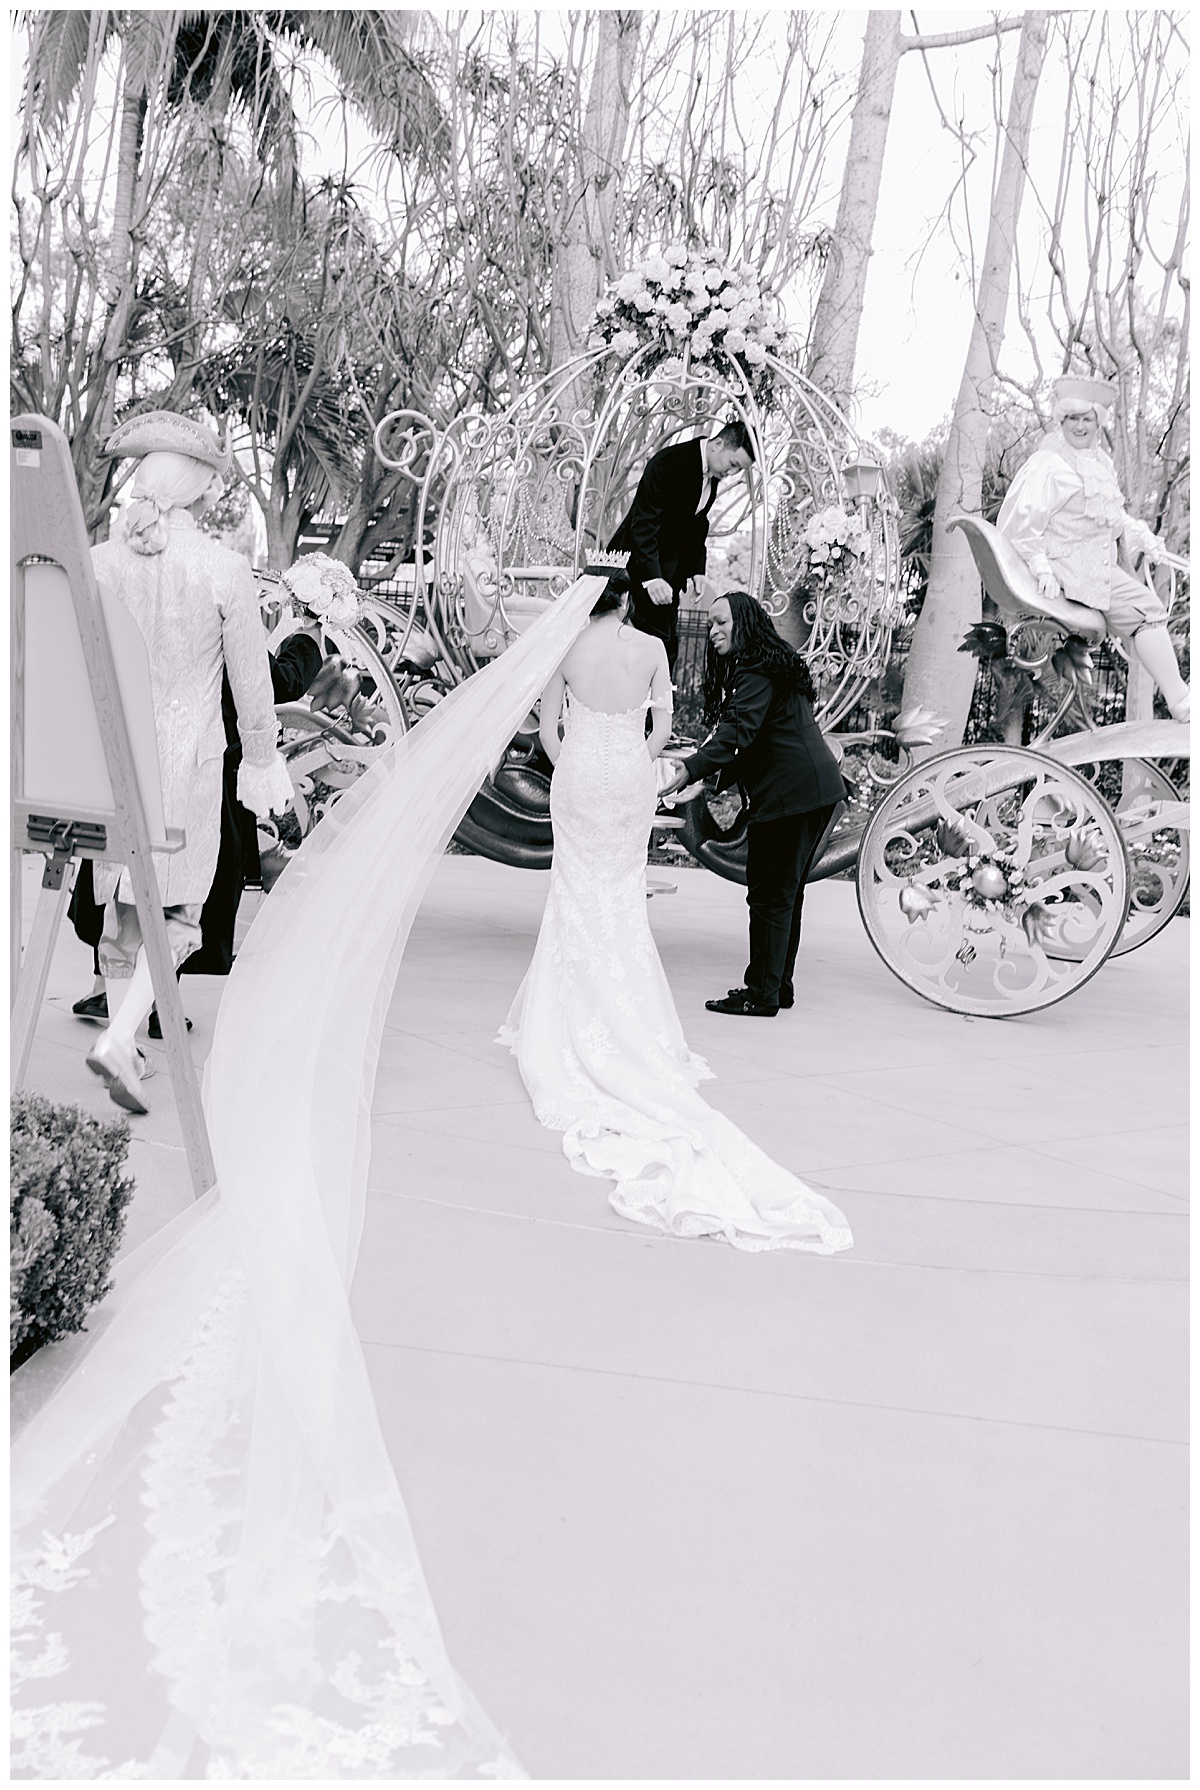 Disneyland Hotel Wedding at the Rose Court Garden with the Cinderella Carriage - White Rabbit Photo Boutique 